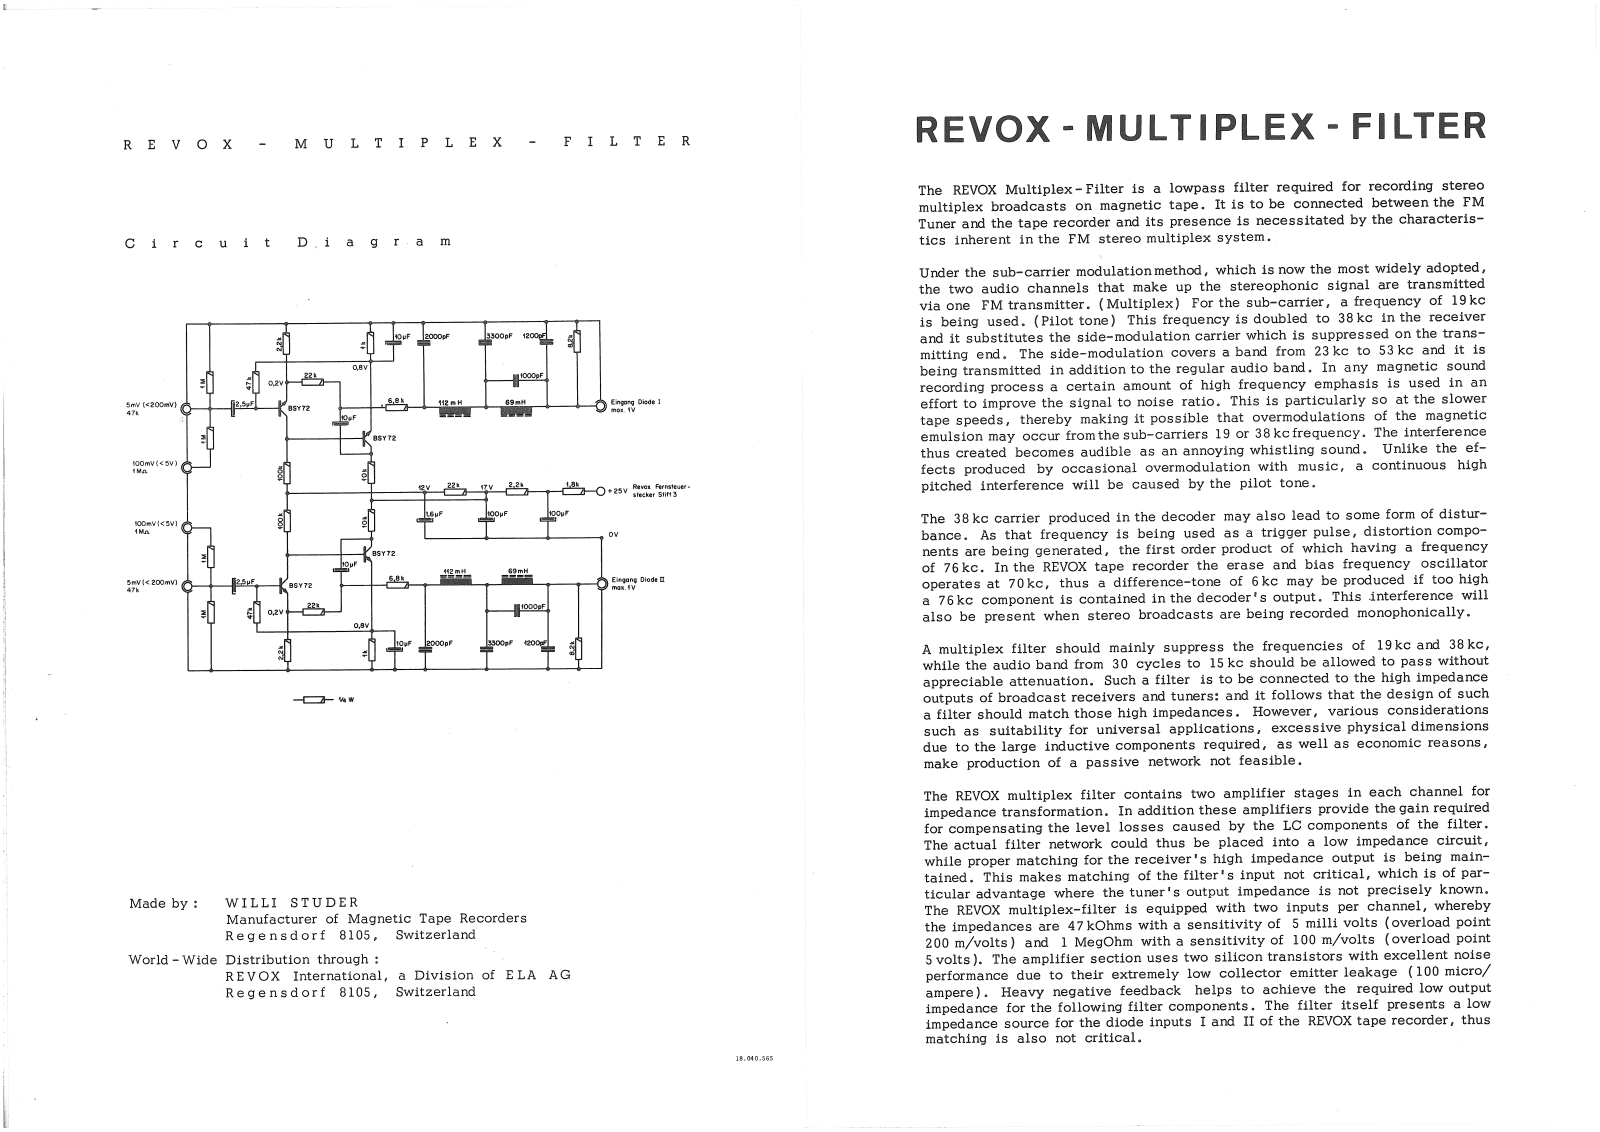 Revox MPX-Filter Owners Manual